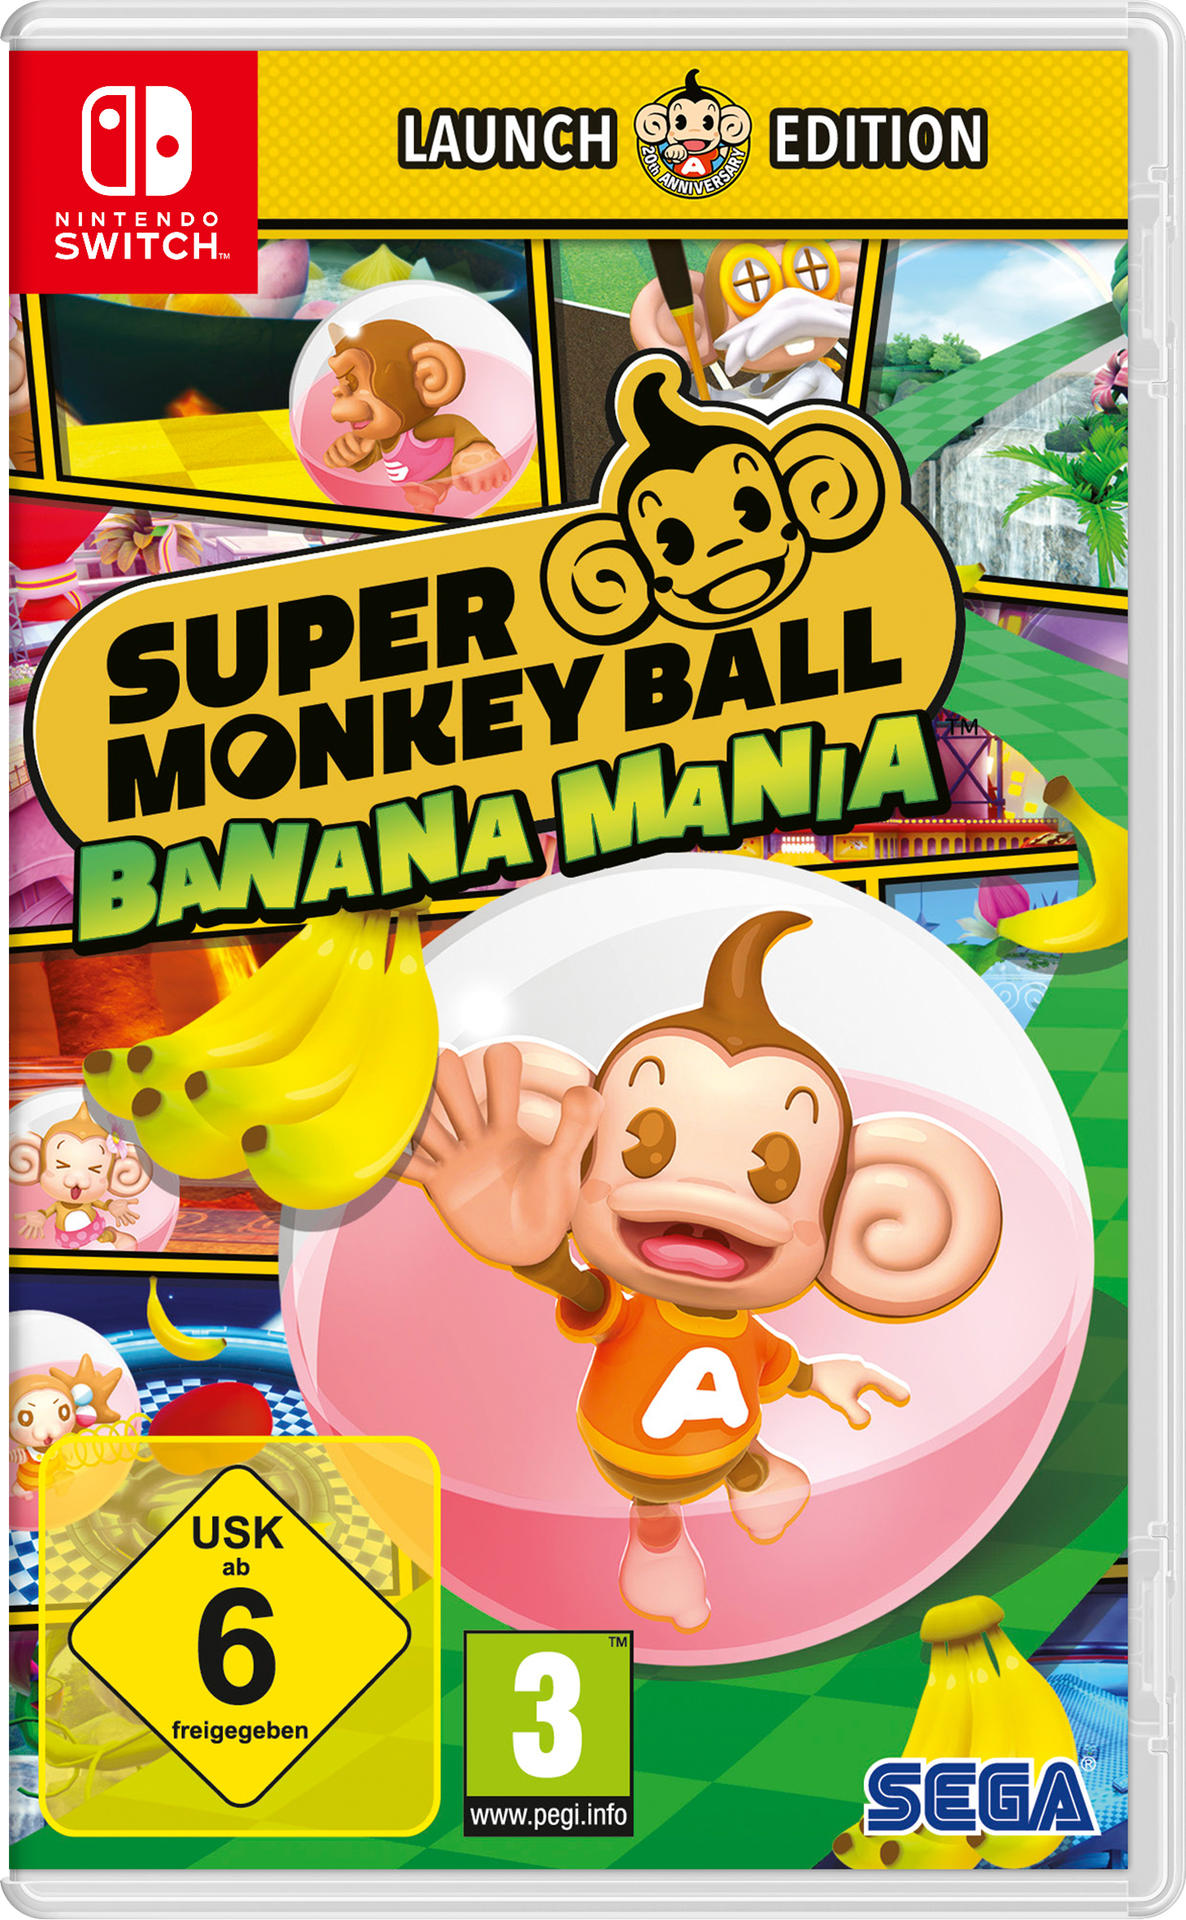 LAUNCH MANIA Switch] [Nintendo BALL EDITION SUPER BANANA - MONKEY SW